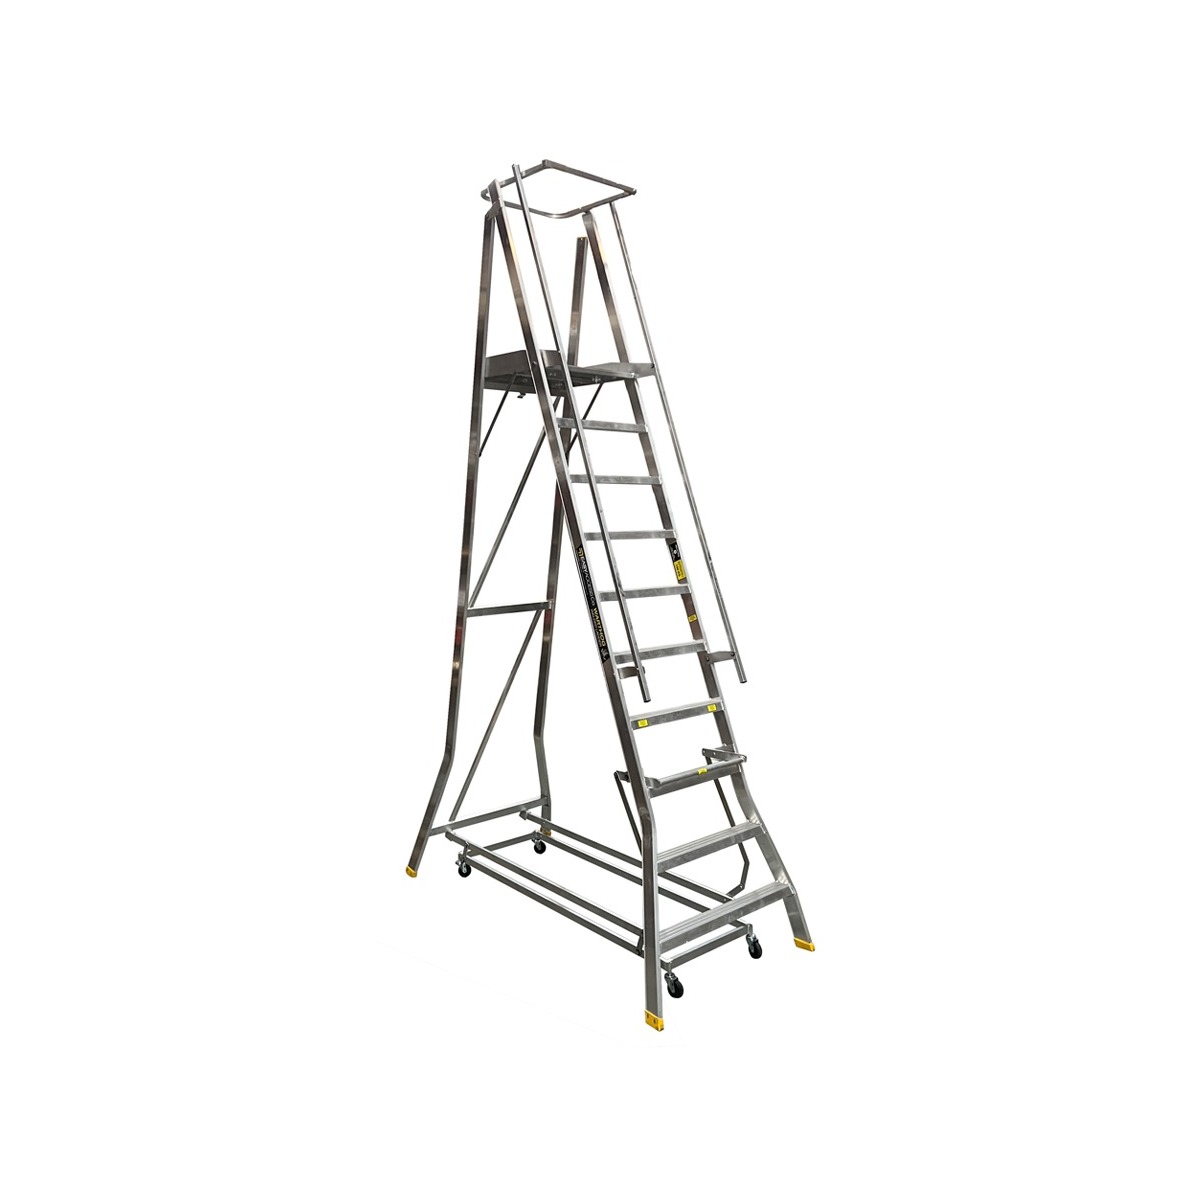 heavy Duty Platform Ladder with wheels